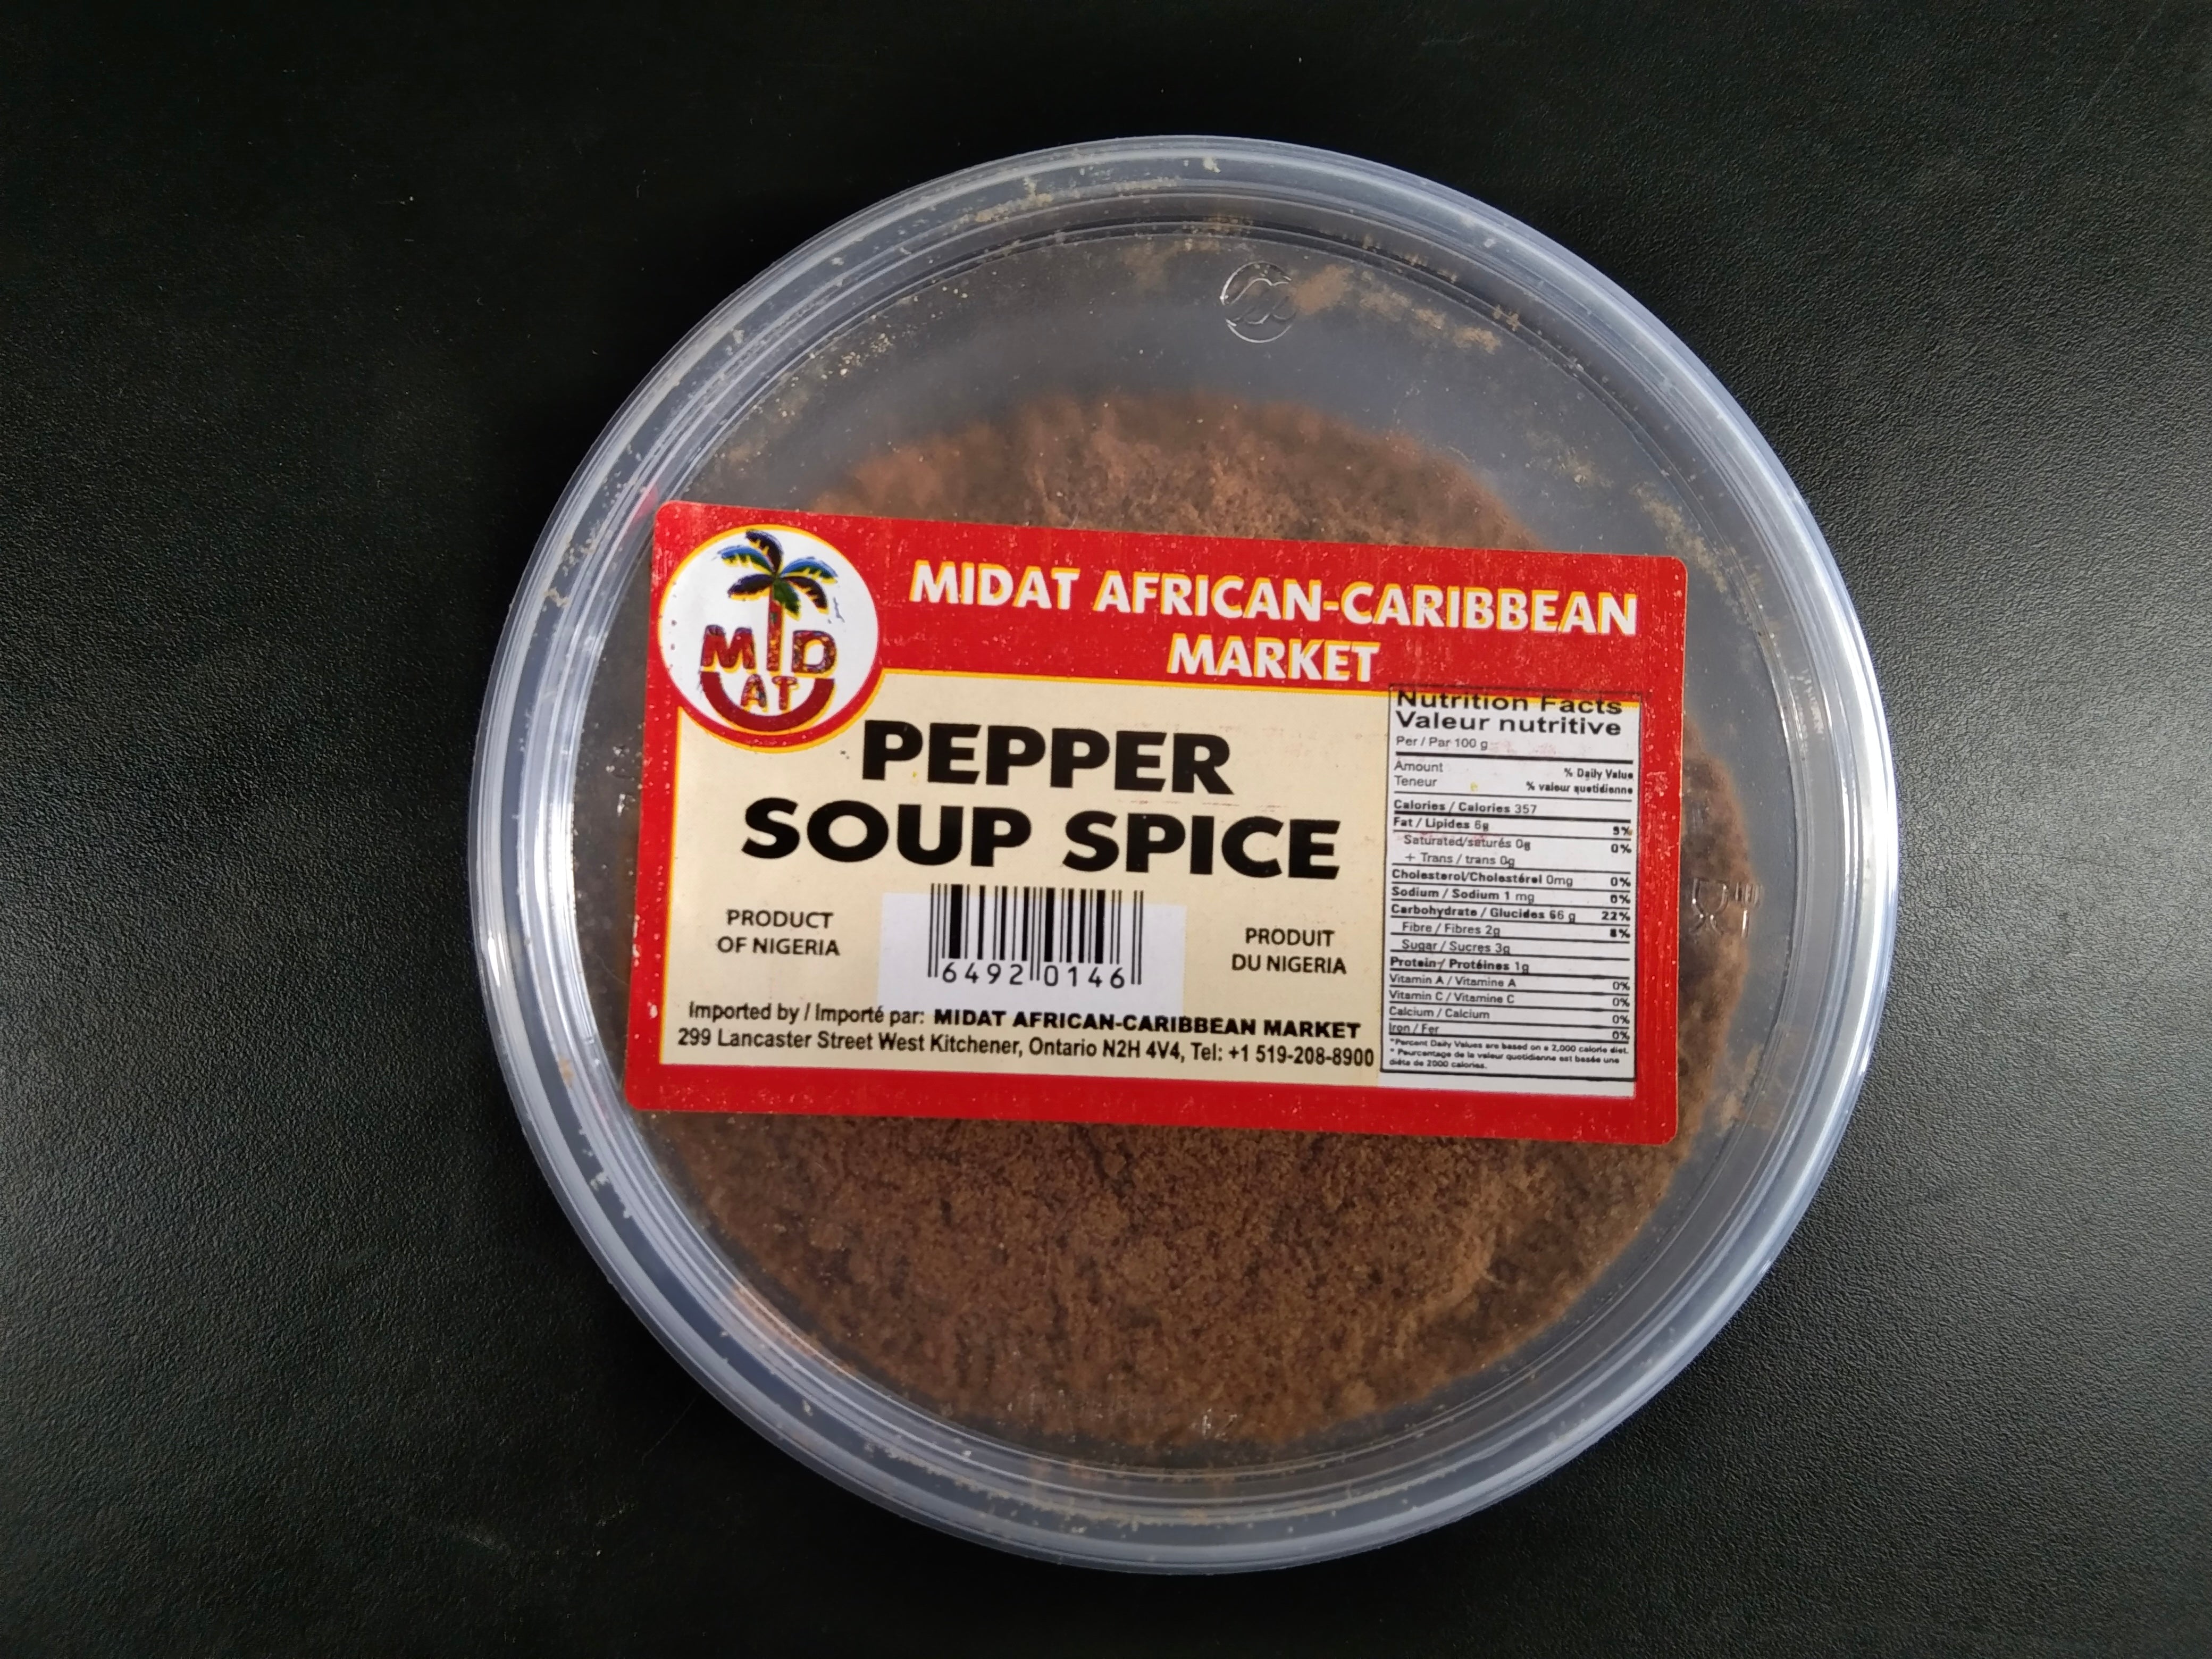 Spice Supreme Jollof Rice Seasoning Powder 156 g - Fresh To Dommot